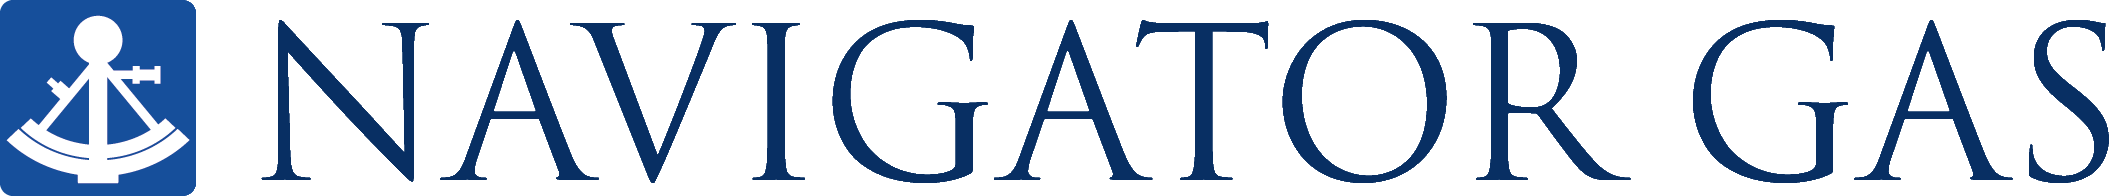 NVGS logo - words (003).png